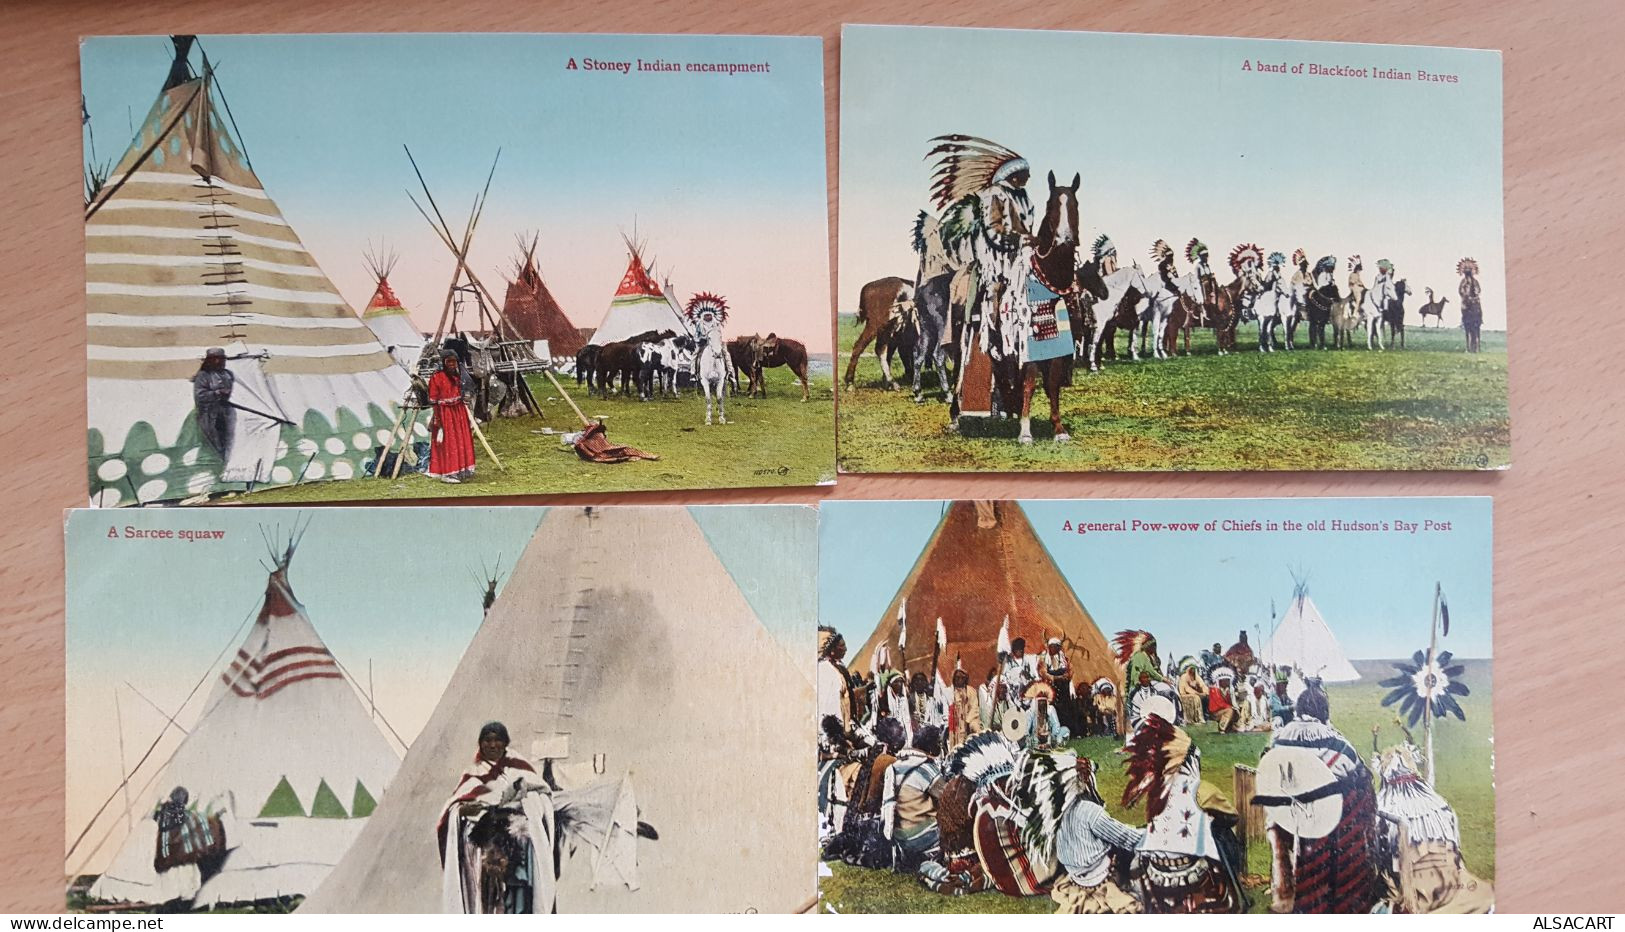 7 Cartes Postales Indiens D'amérique - Indios De América Del Norte